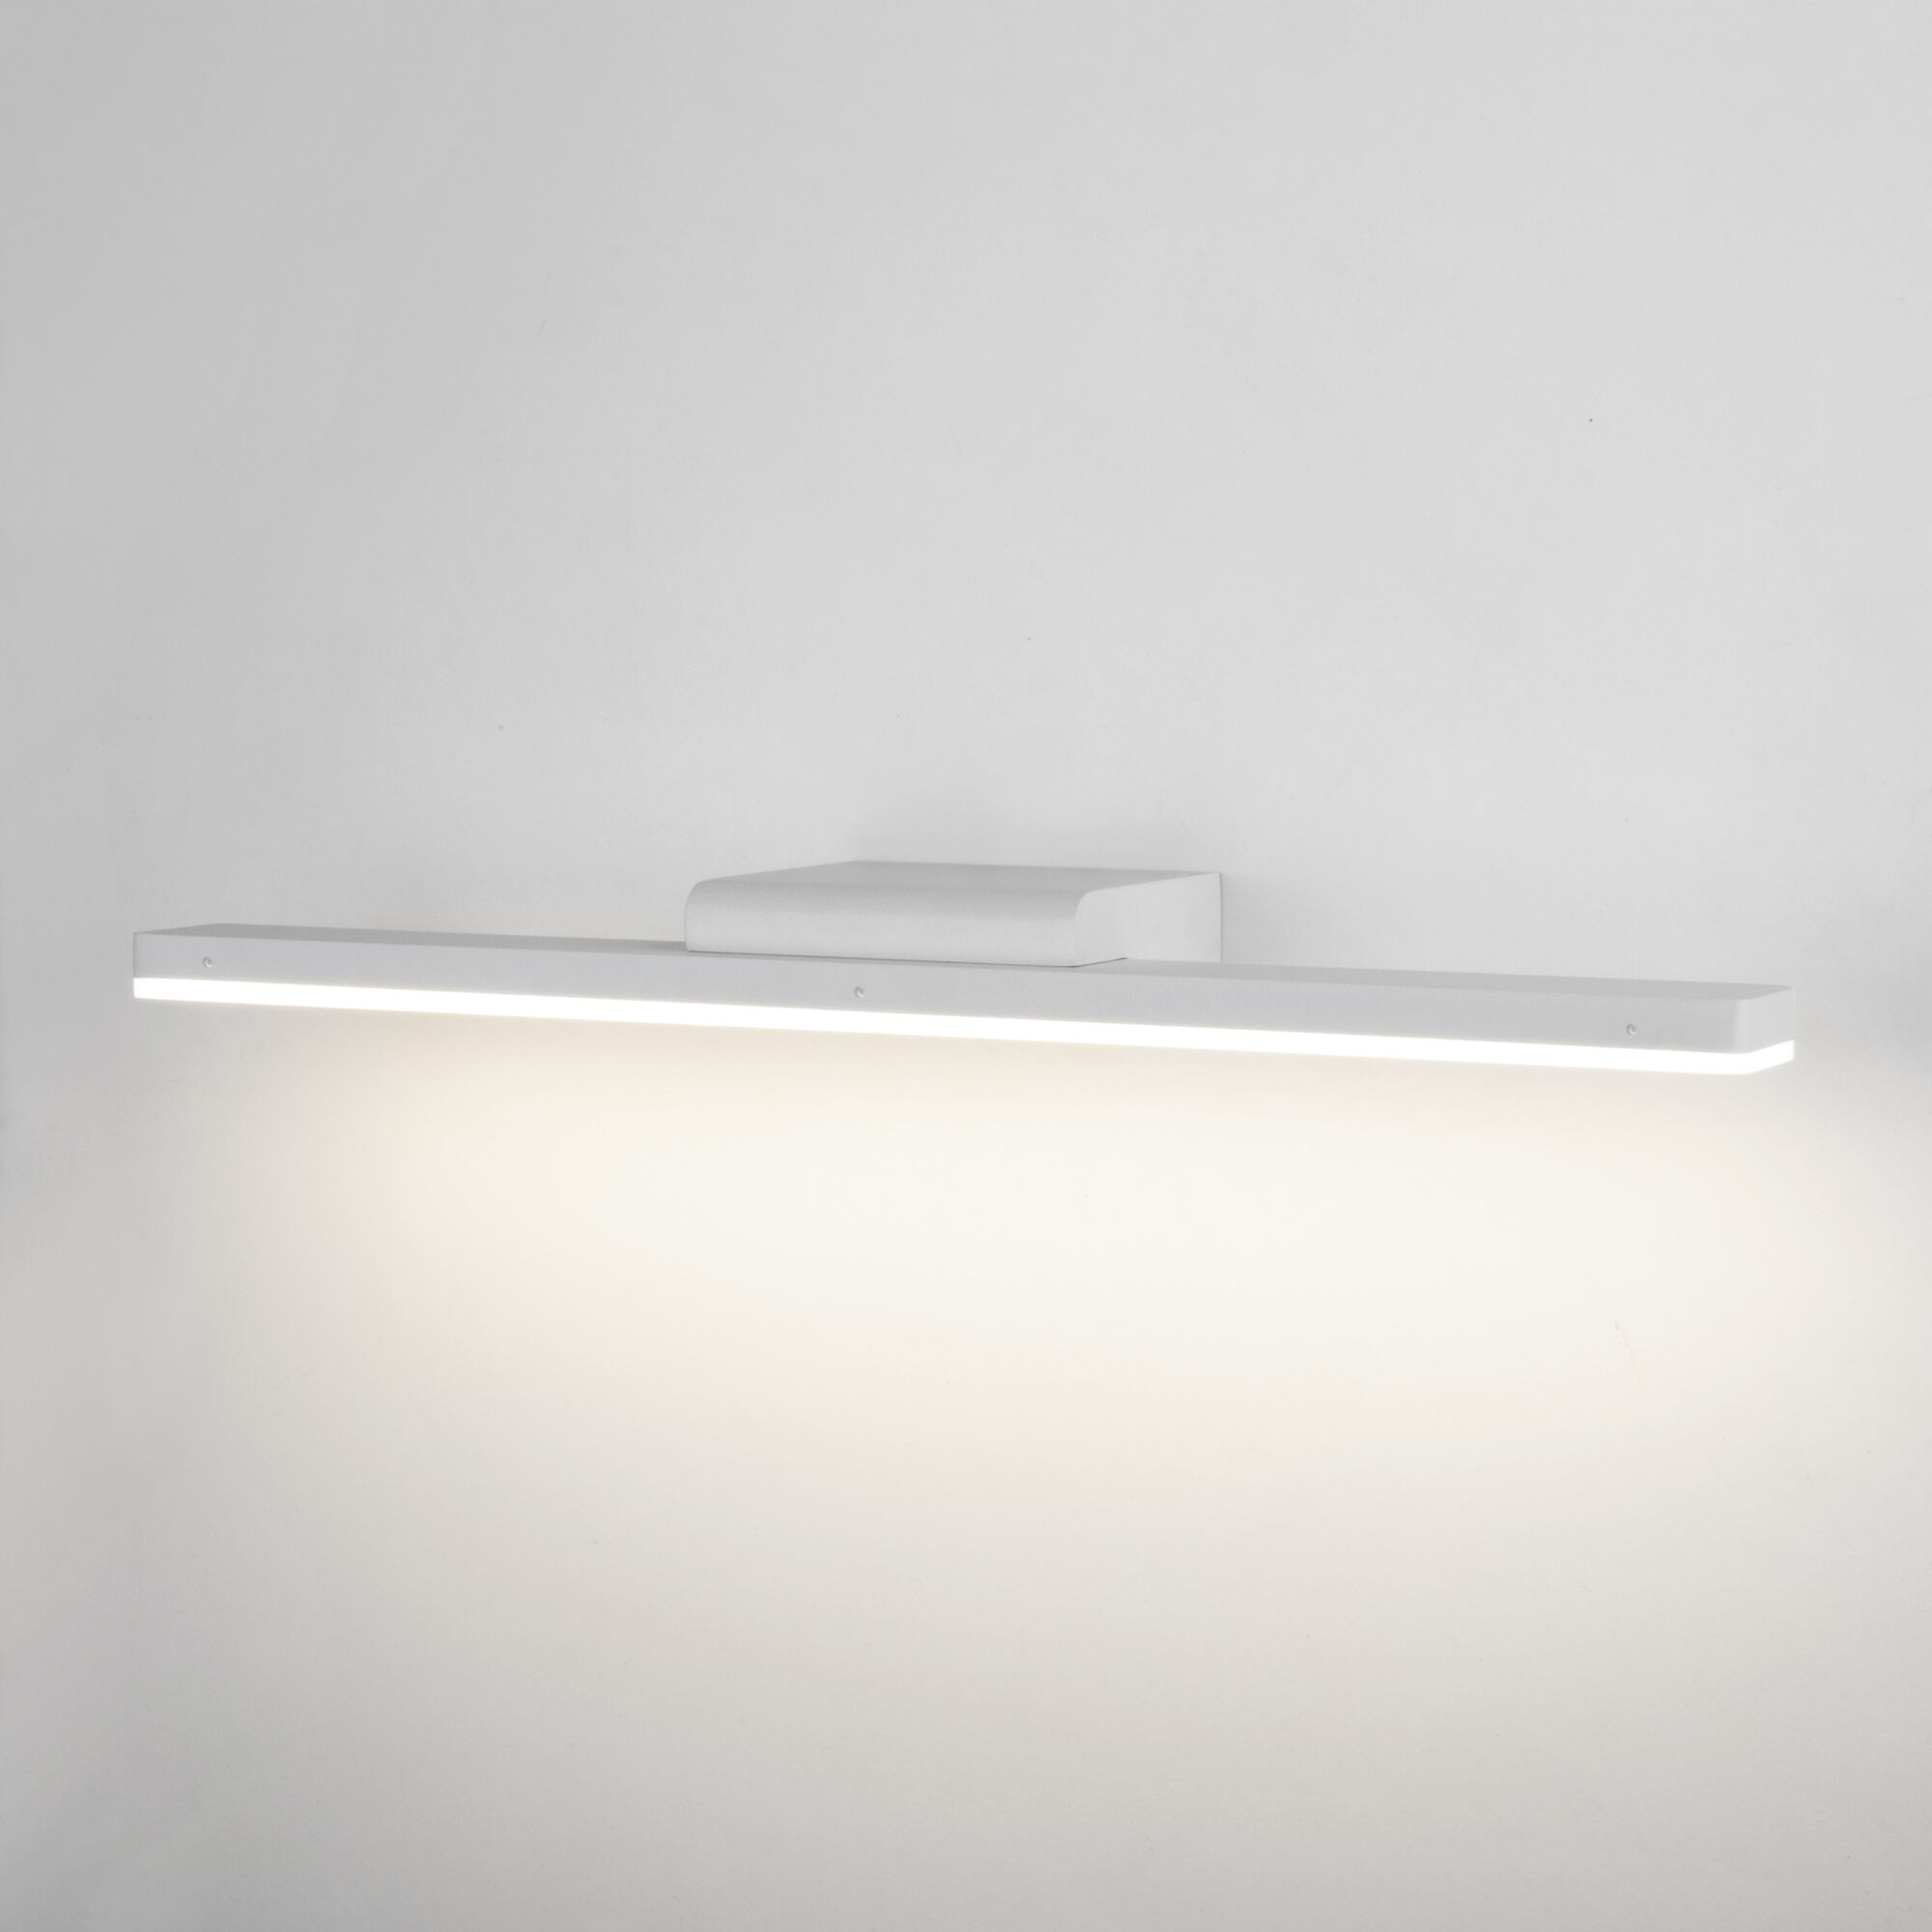 Настенный светодиодный светильник Protect LED MRL LED 1111 белый MRL LED 1111